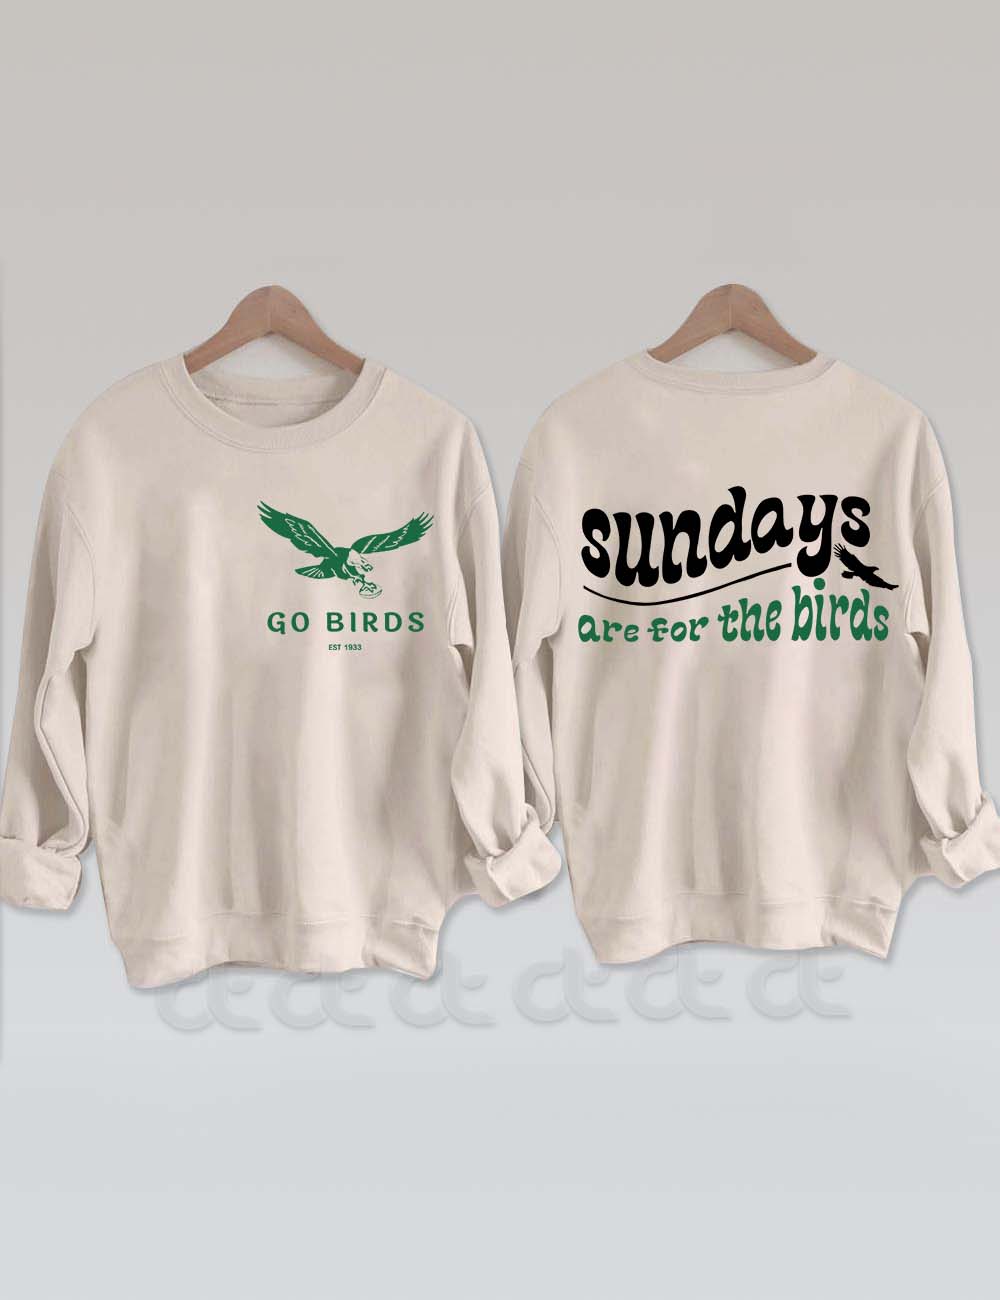 Go Birds Sundays Are For The Birds Philadelphia Football Sweatshirt